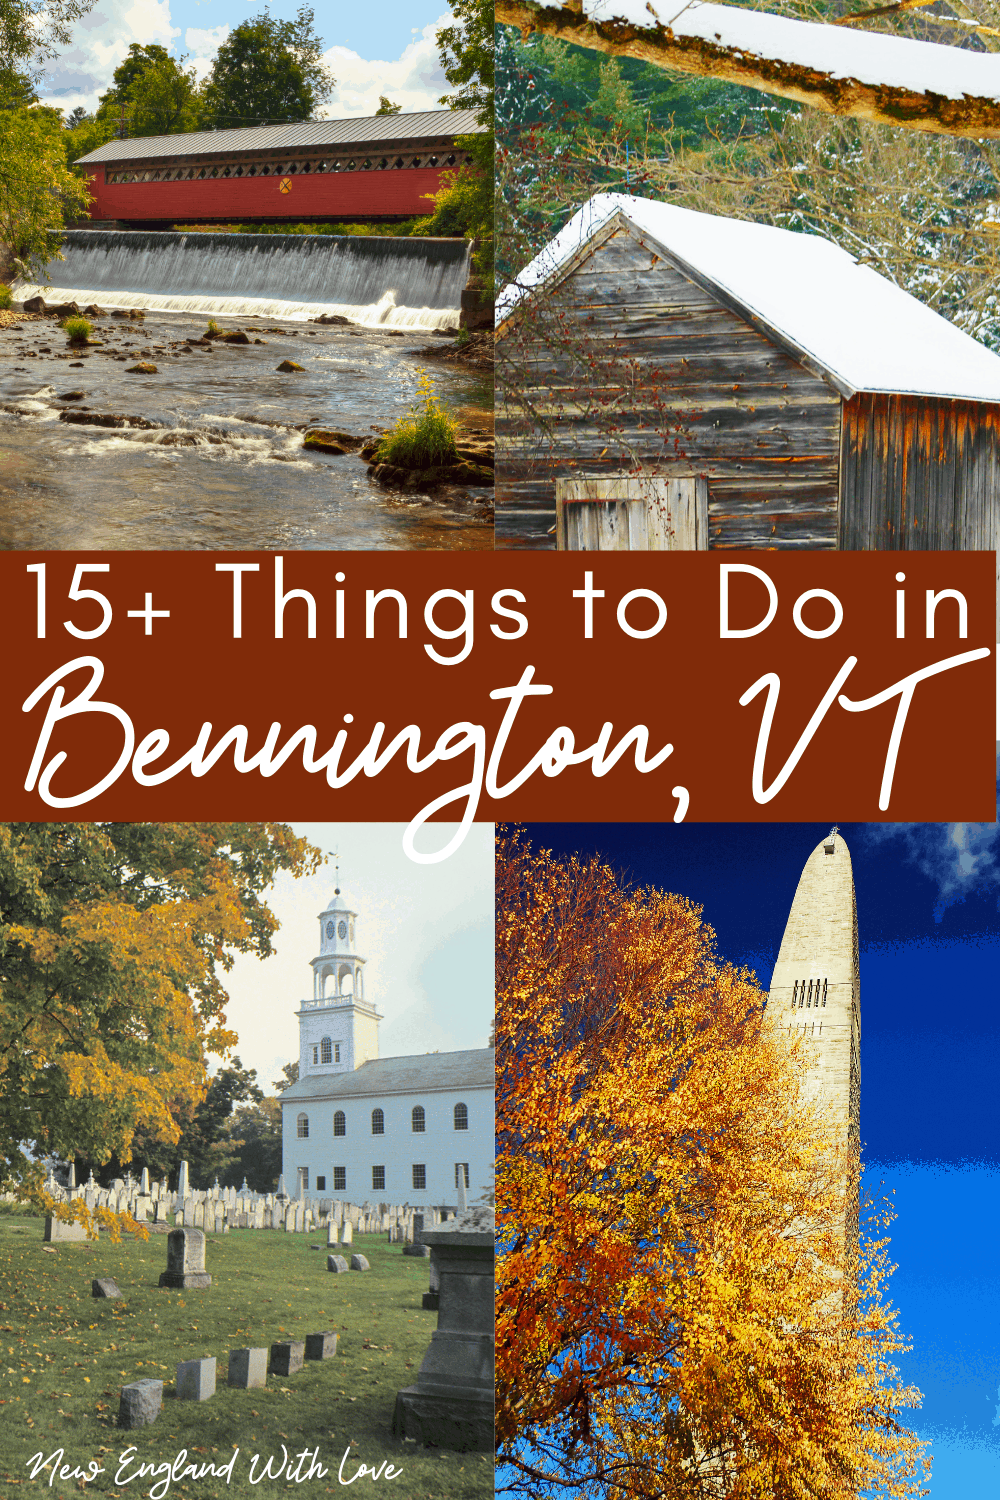 Bennington and Vermont